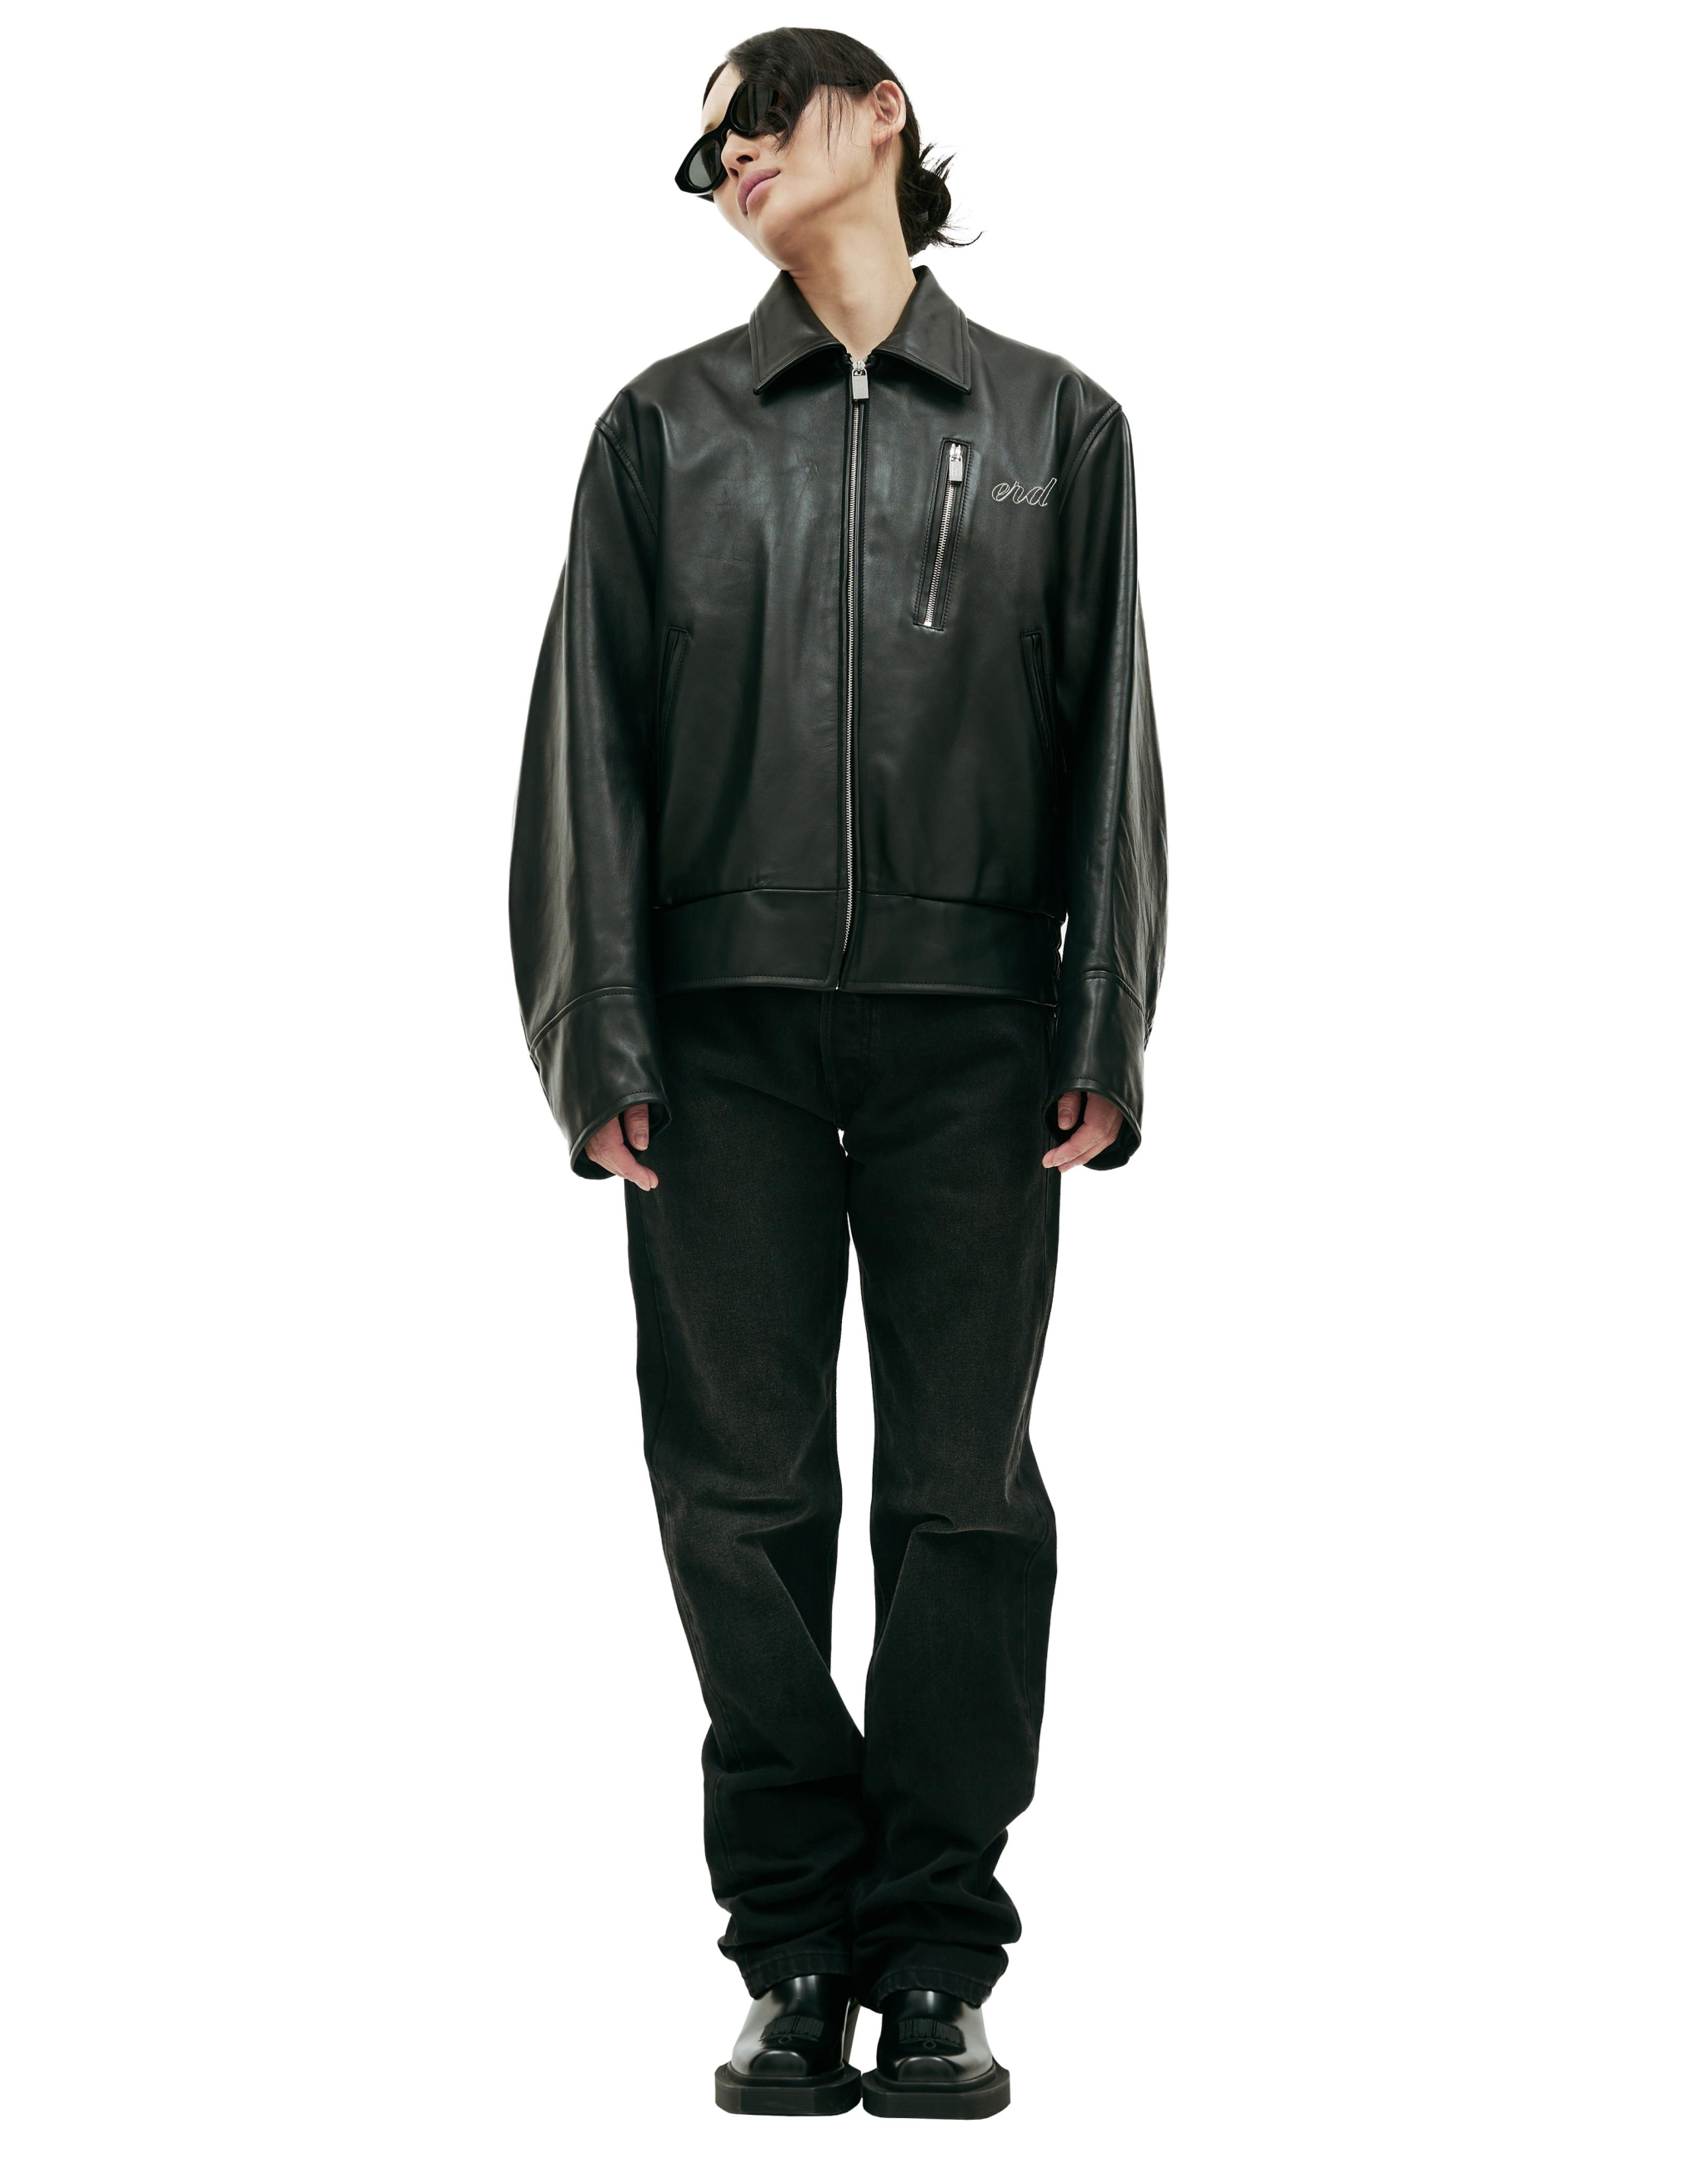 Кожаная куртка с вышивкой Enfants Riches Deprimes 030-391, размер 2XL